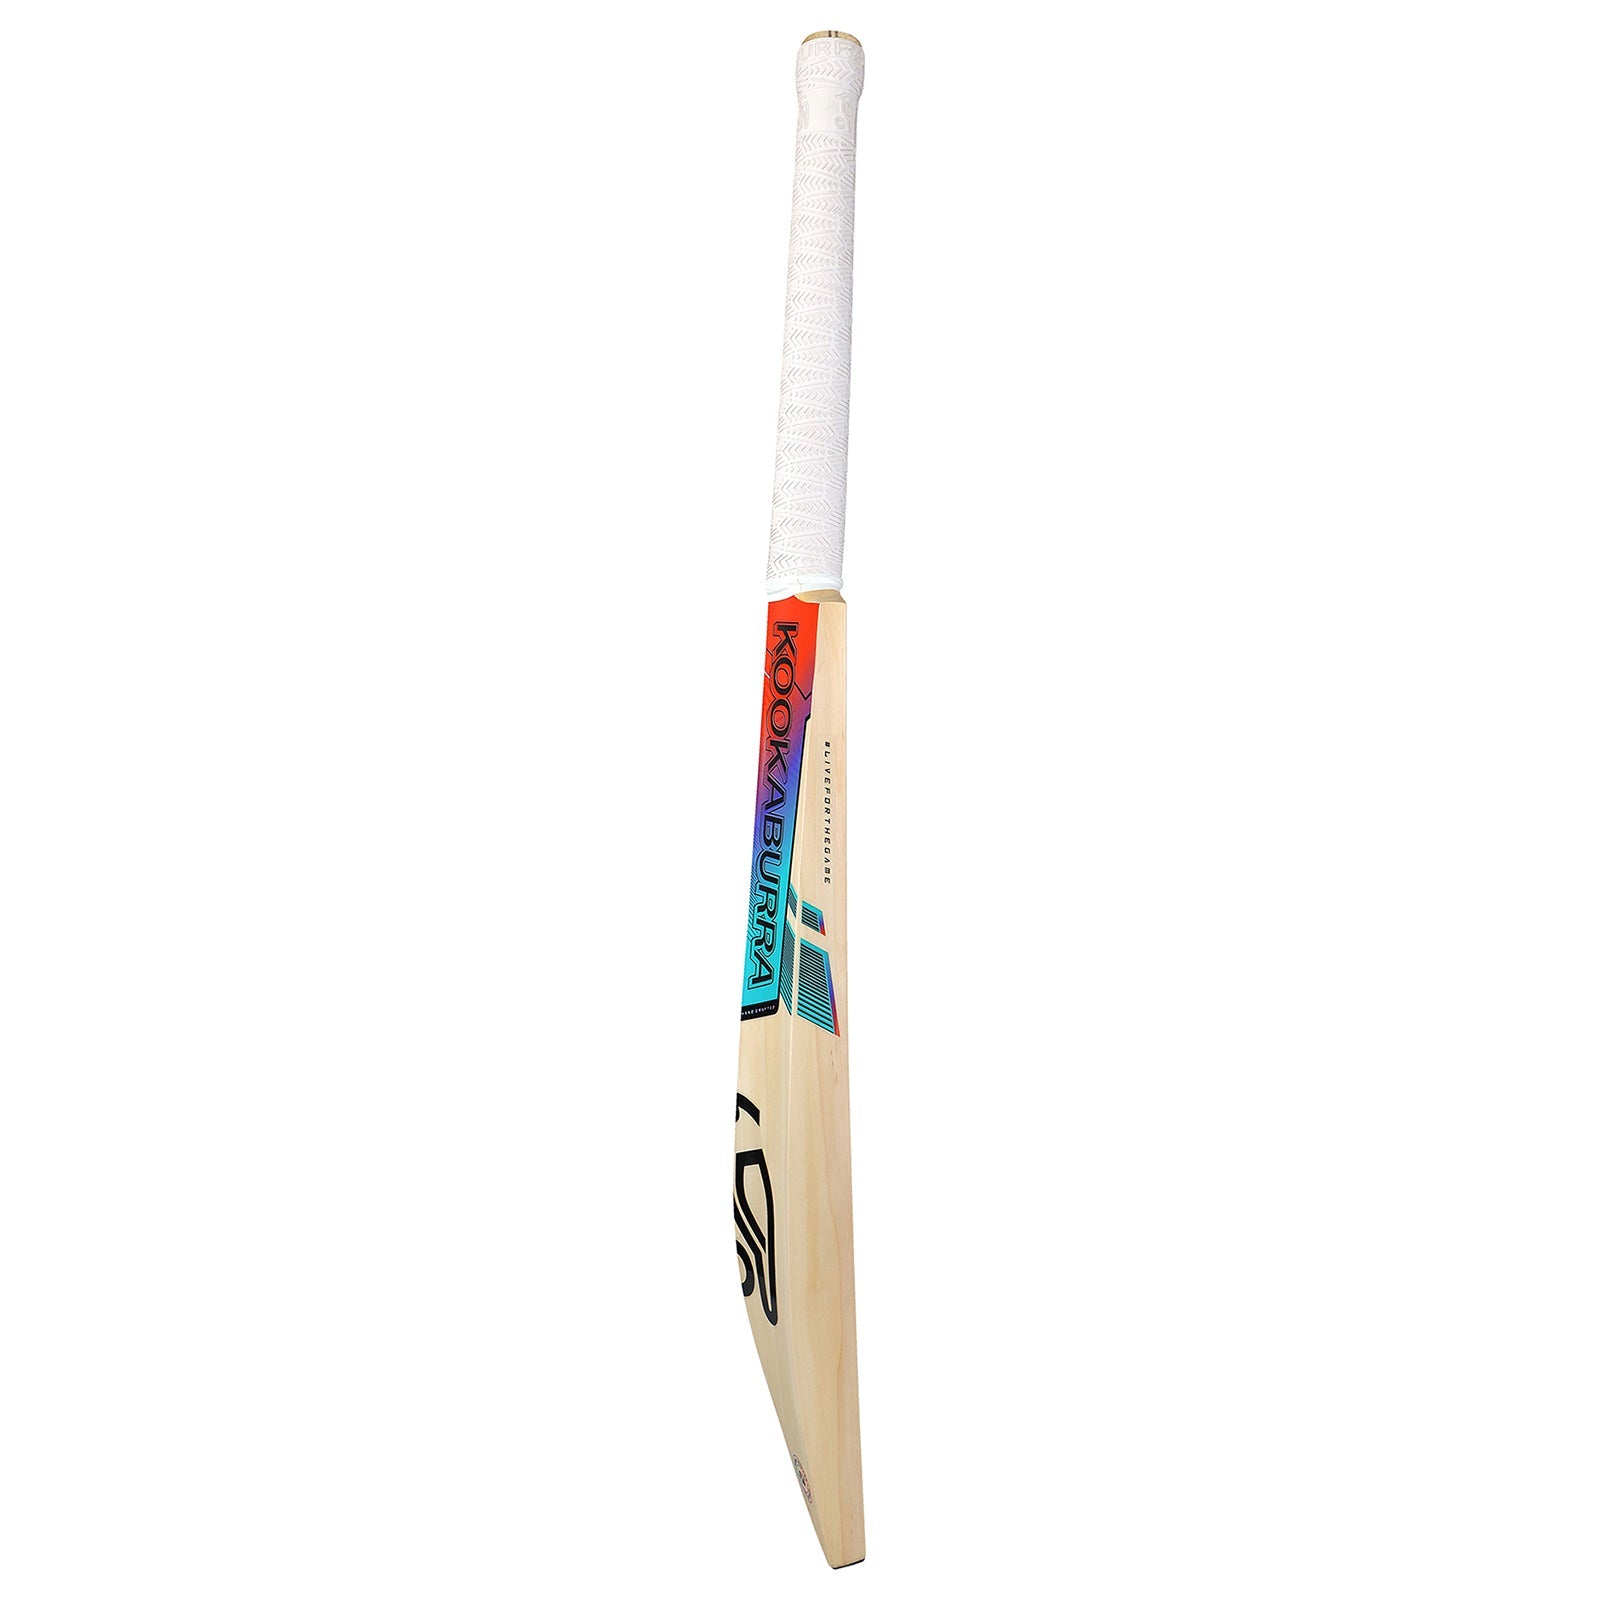 Kookaburra Aura Pro 4.0 Cricket Bat - Harrow